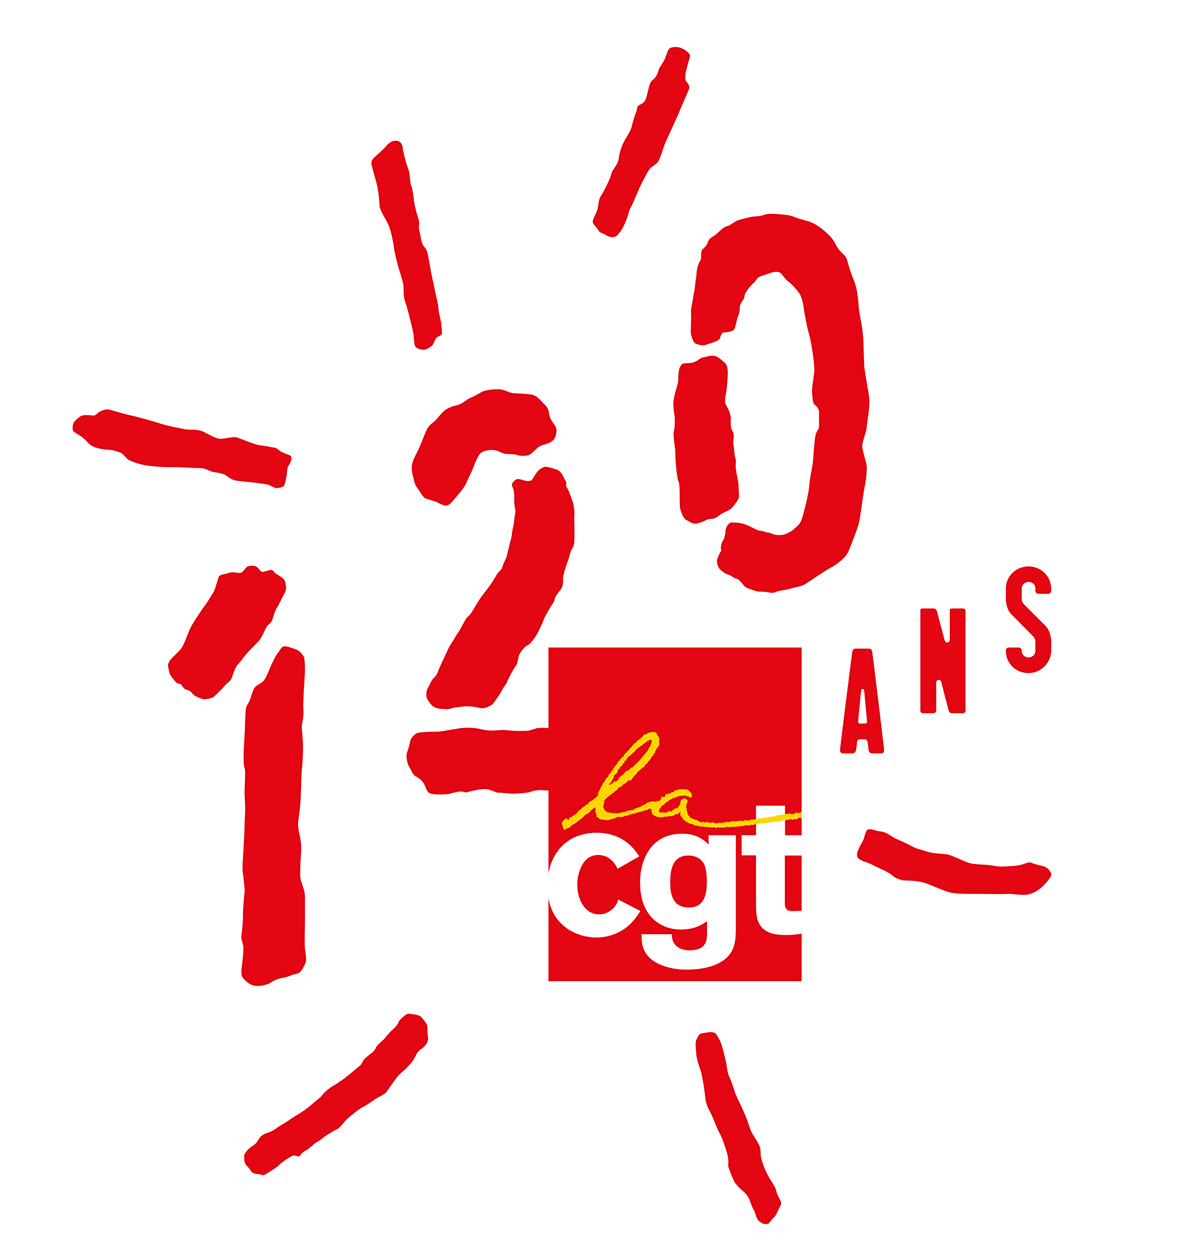 logo CGT